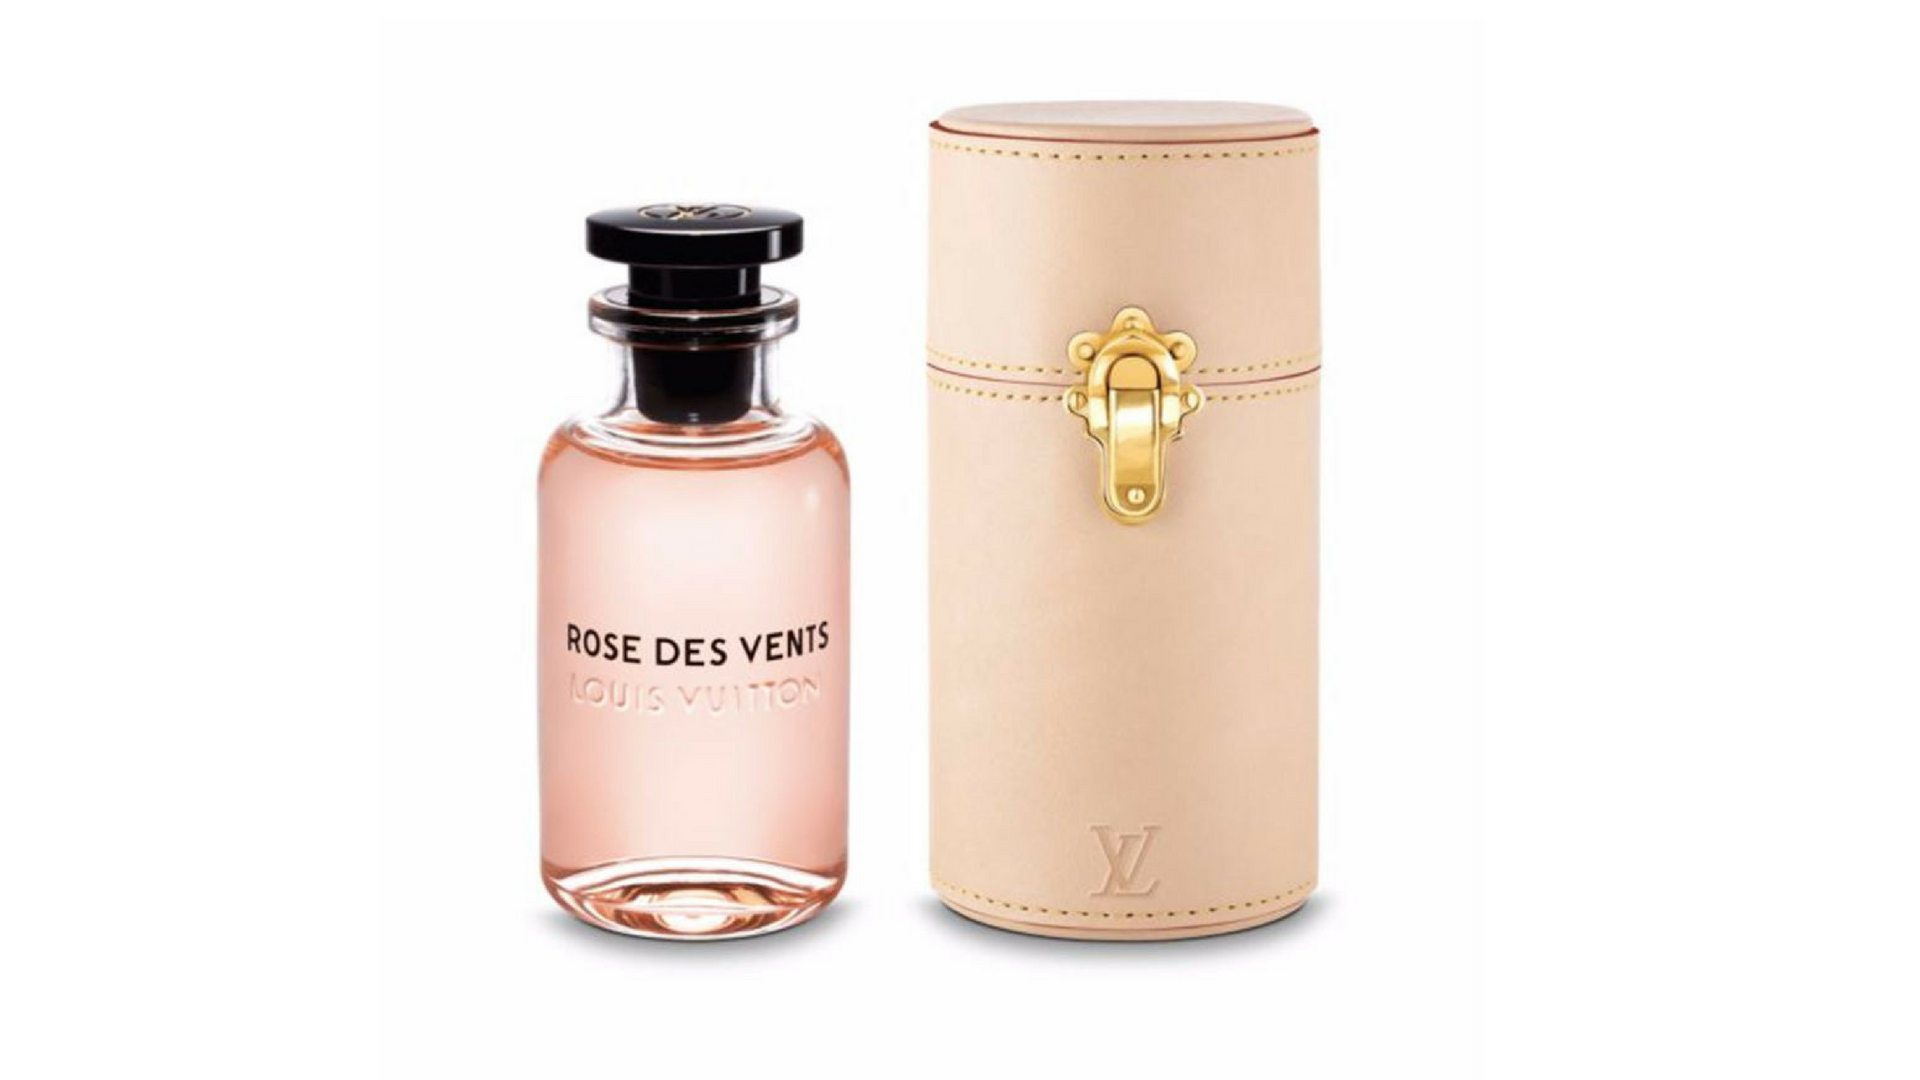 Louis Vuitton Orage Eau De Parfum Sample Spray - 2ml/0.06oz LV